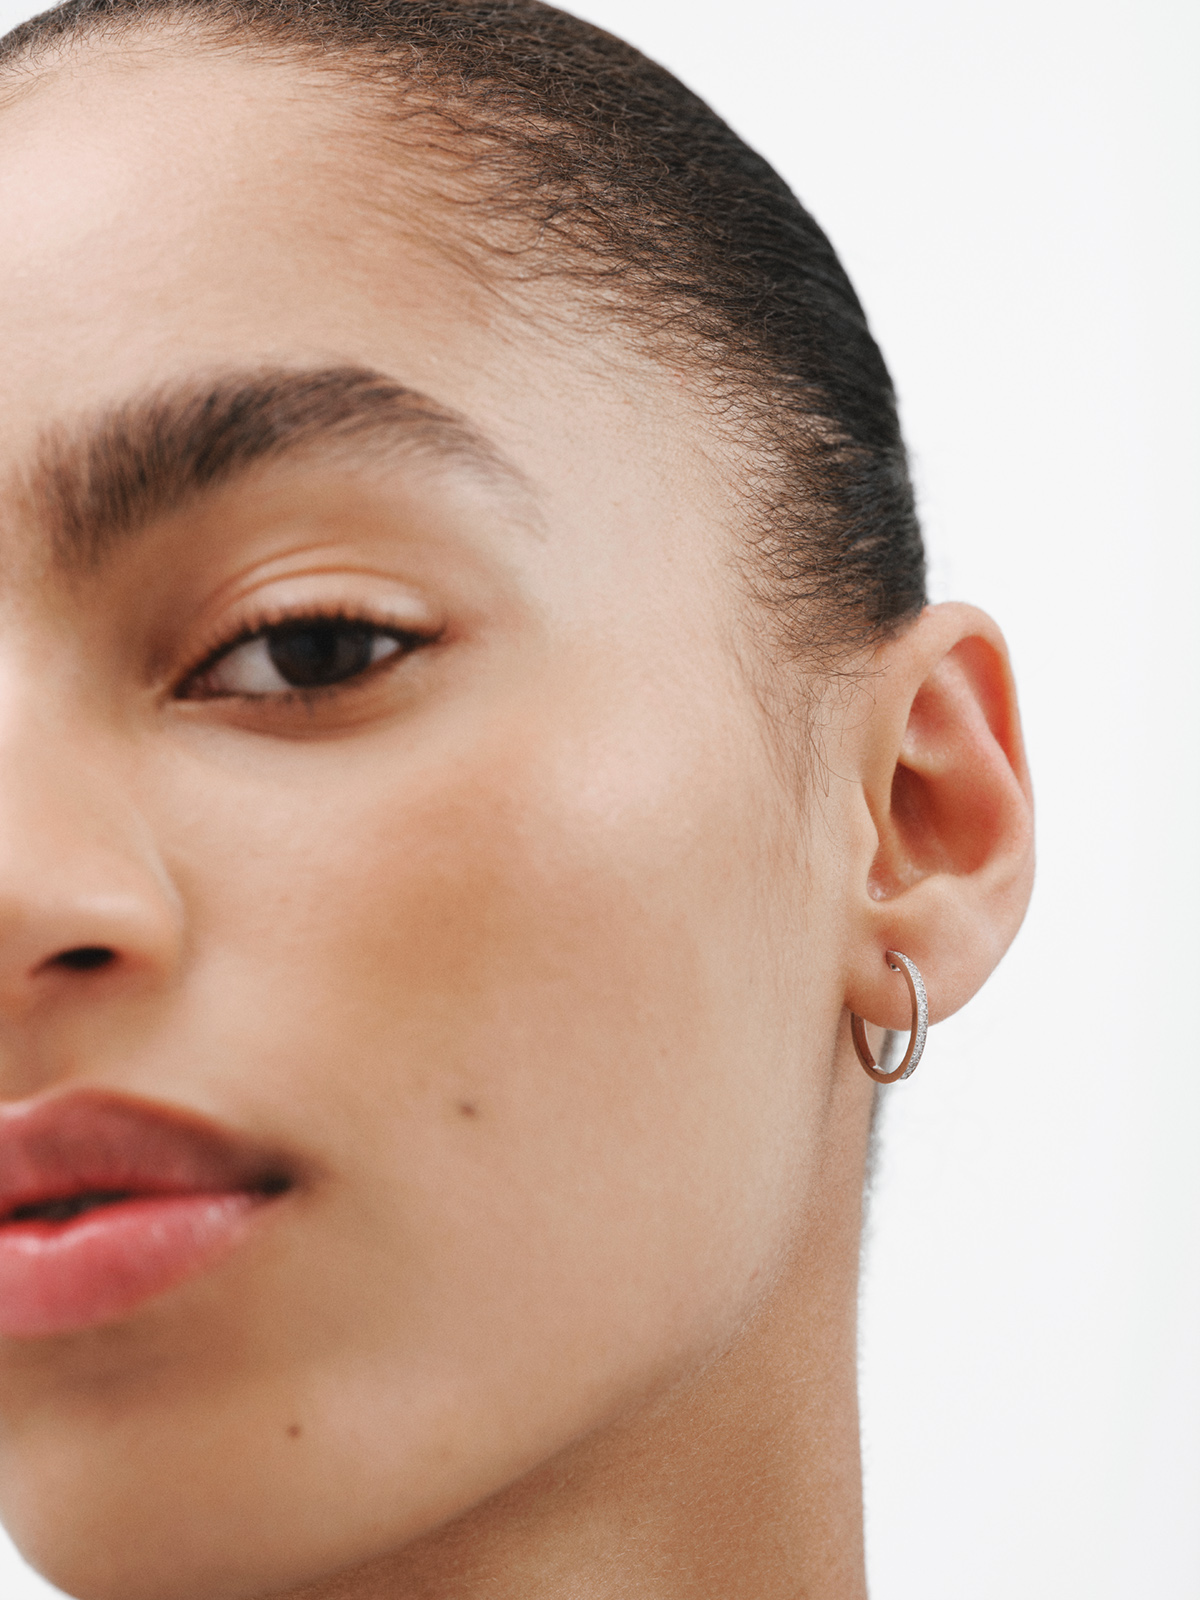 18K white gold single hoop earring with brilliant-cut diamond